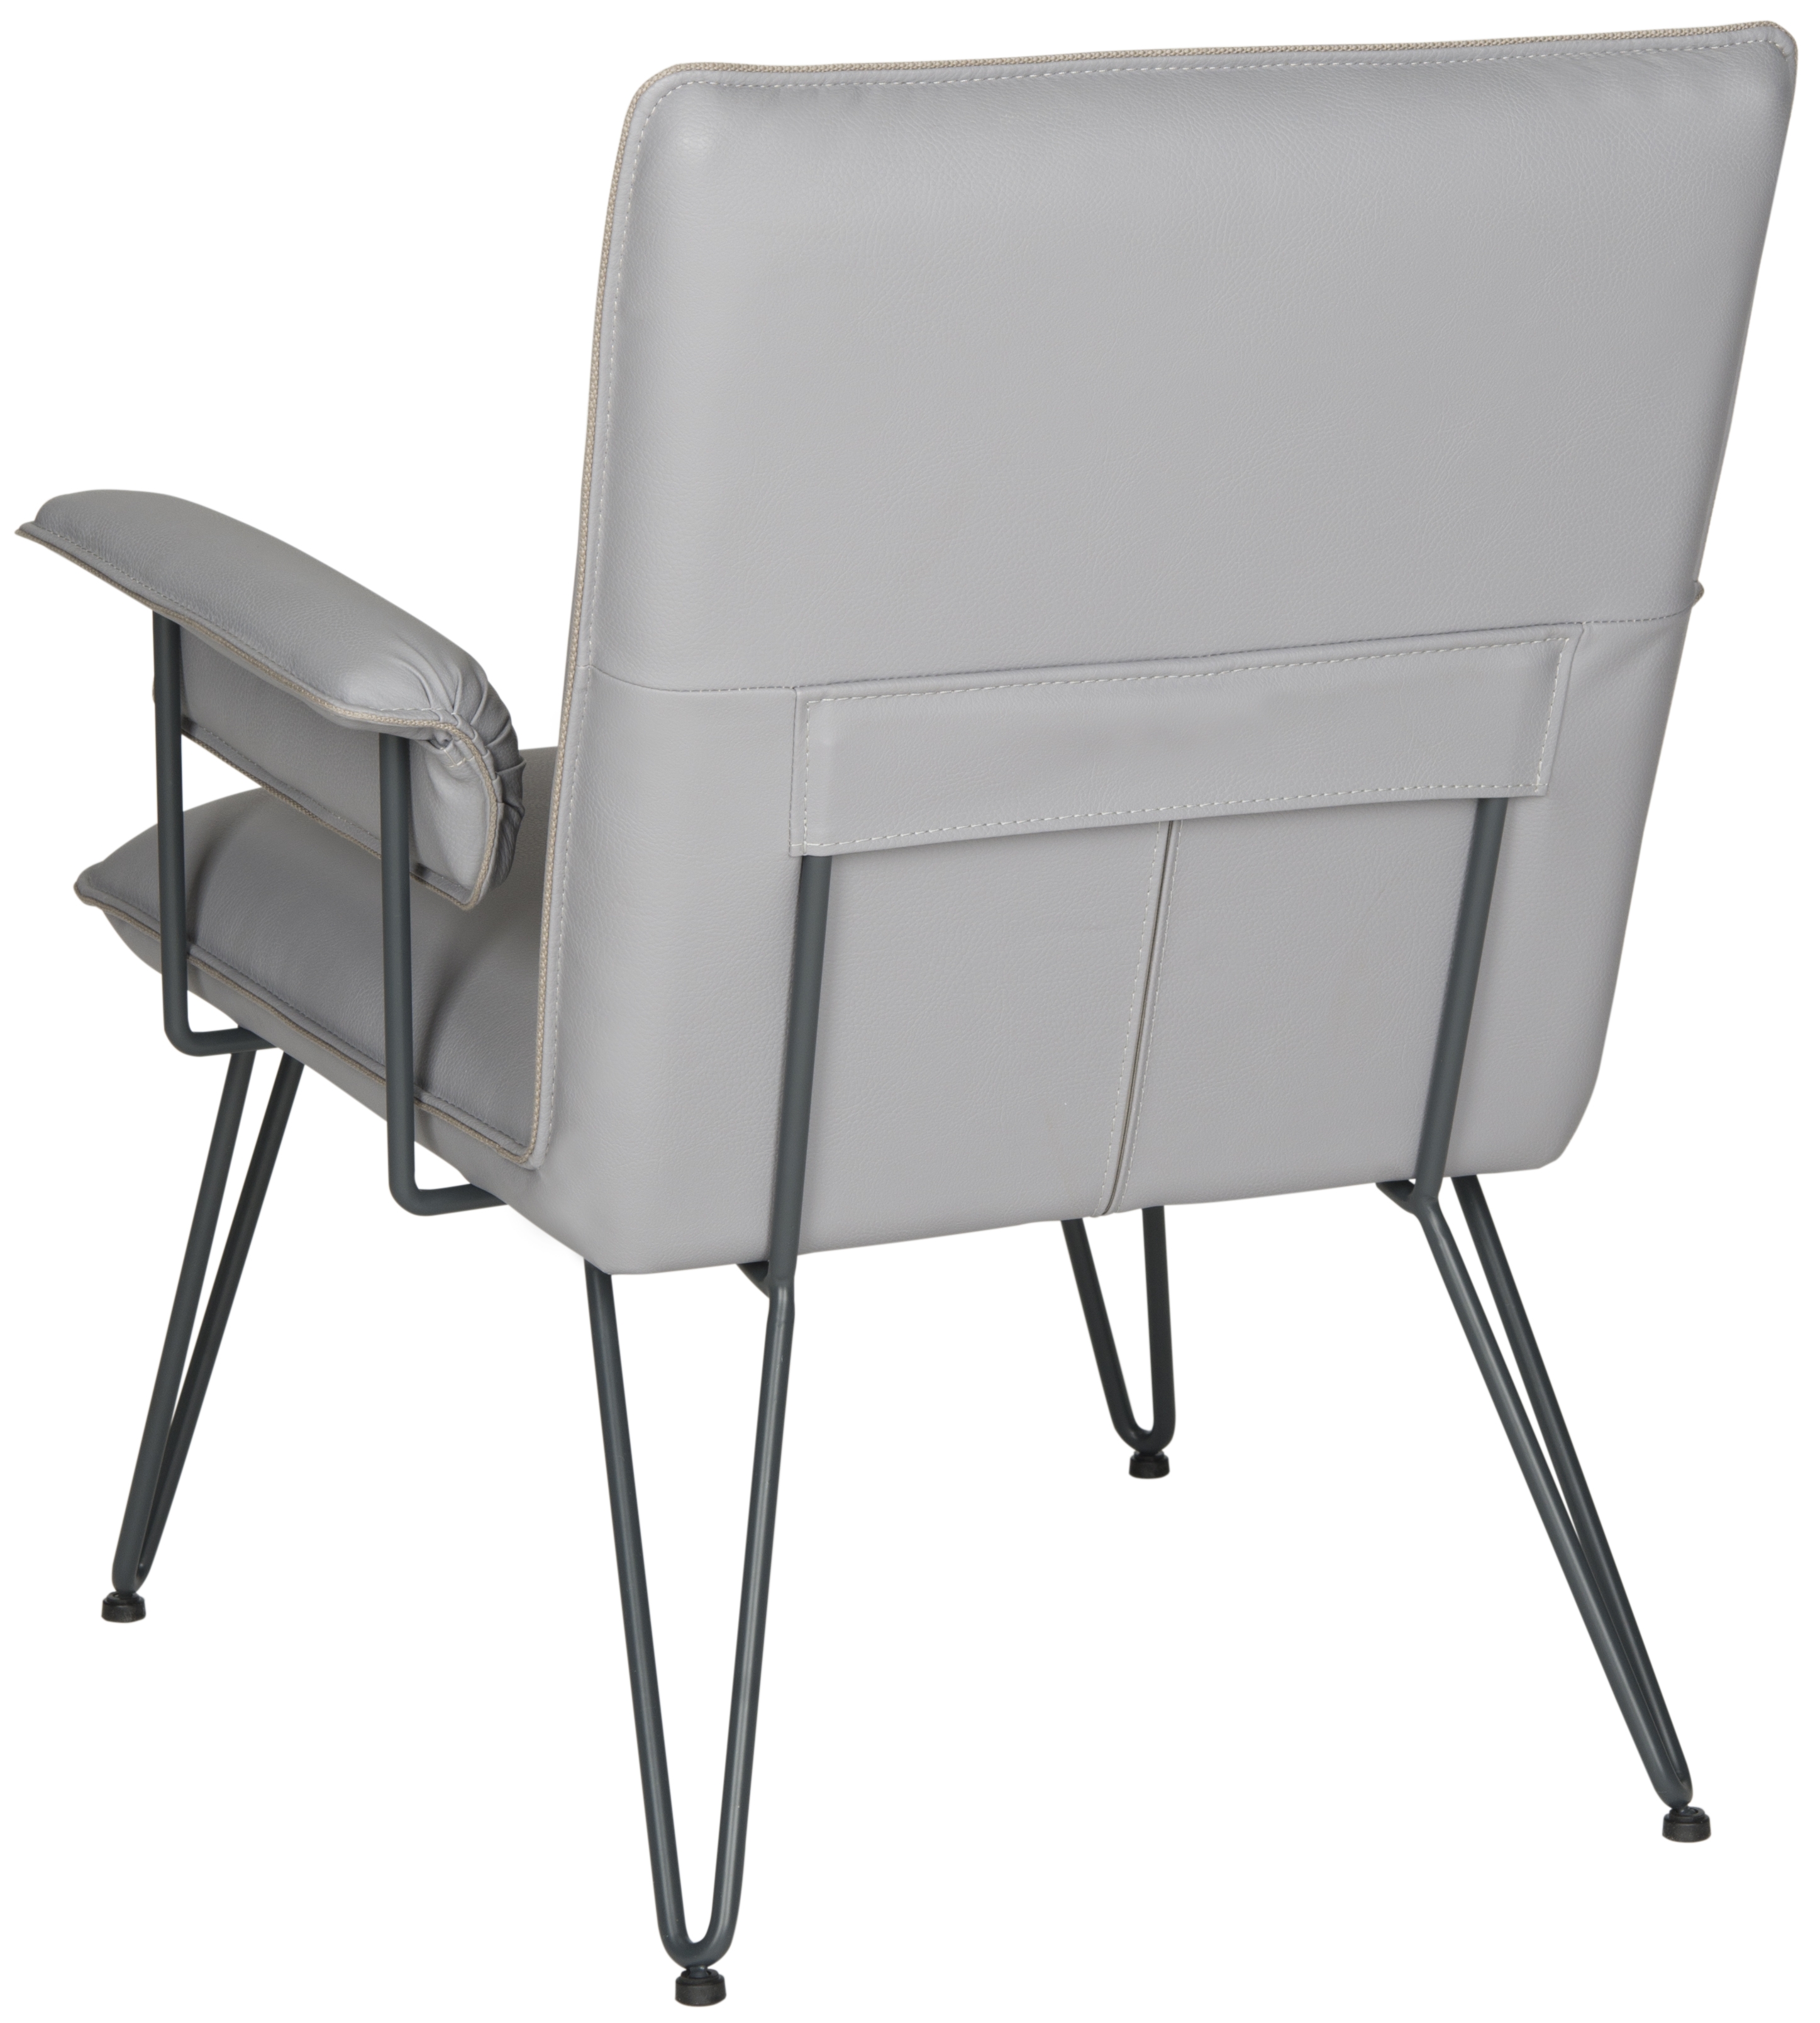 Johannes 17.3"H Mid Century Modern Leather Arm Chair - Grey/Black - Arlo Home - Image 2